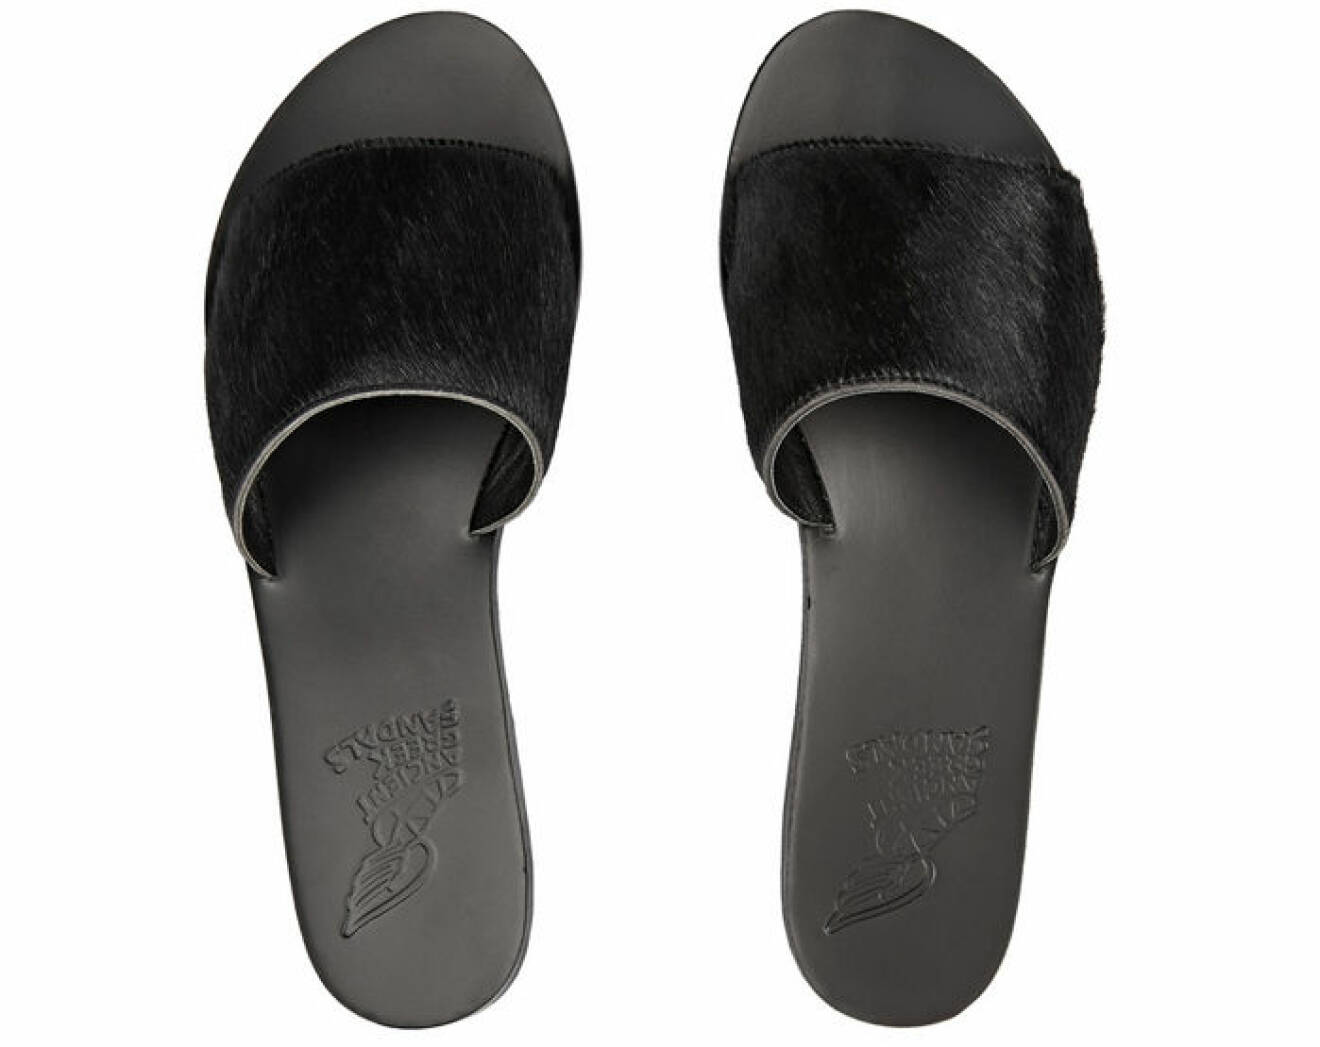 7. Slip in, 1345 kr, Ancient Greek Sandals Net-a-porter.com